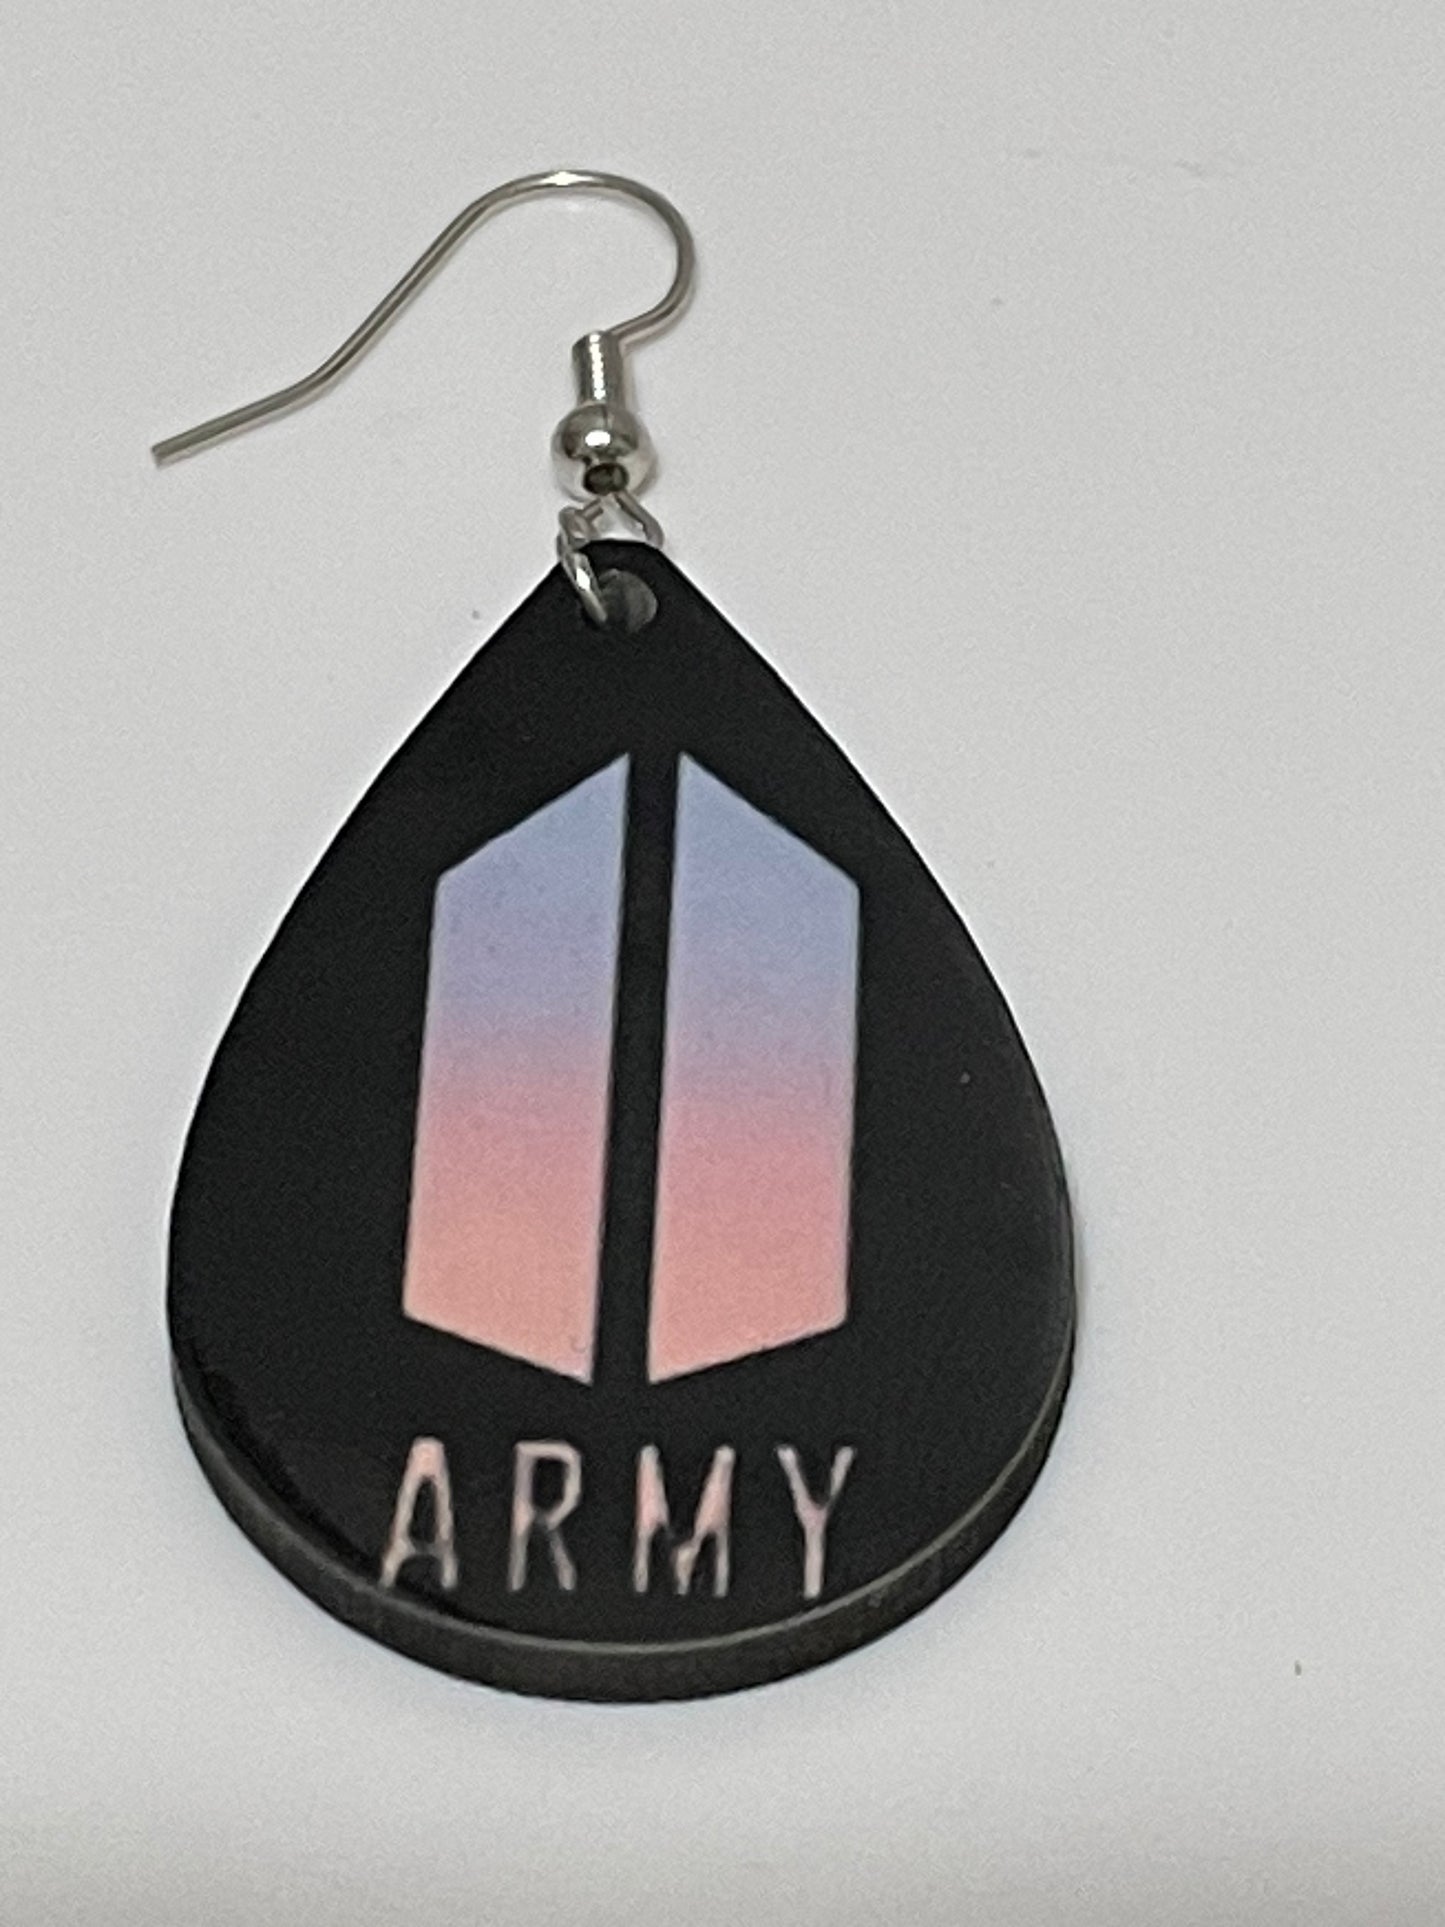 BTS ARMY logo earrings